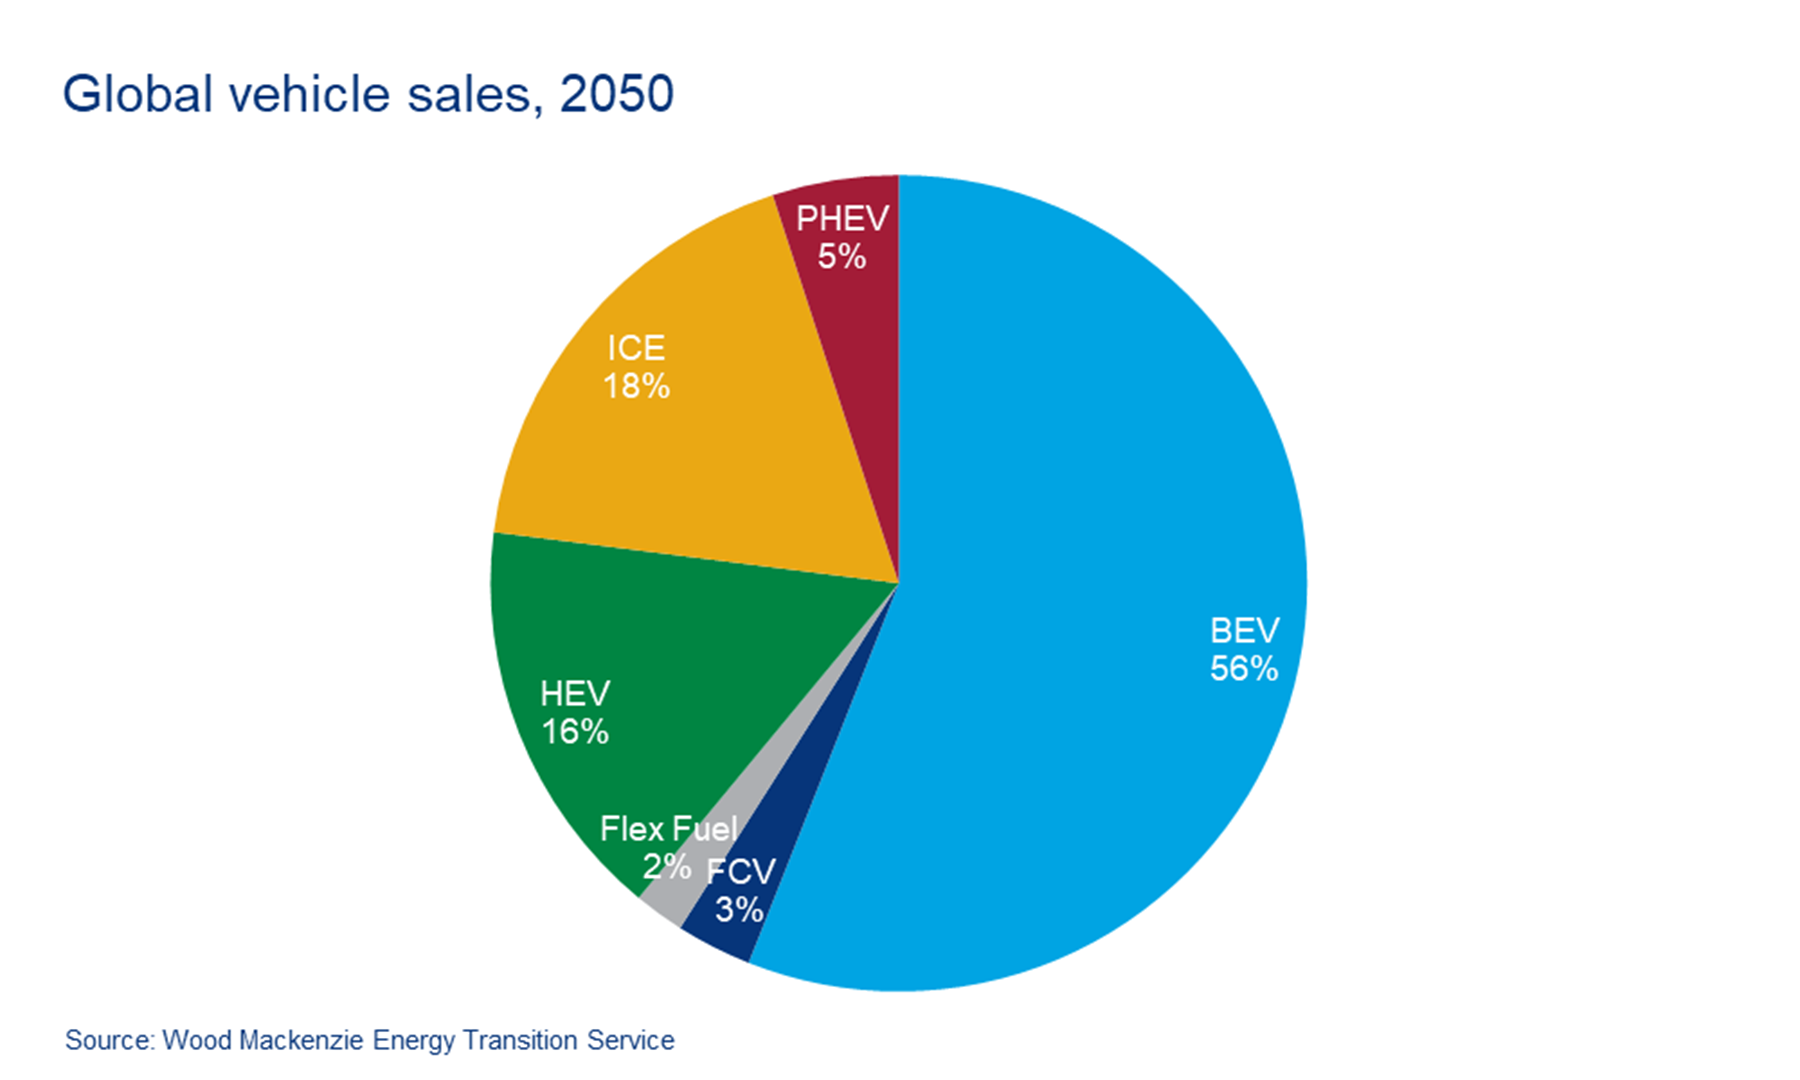 Chart shows global vehicle sales, 2050